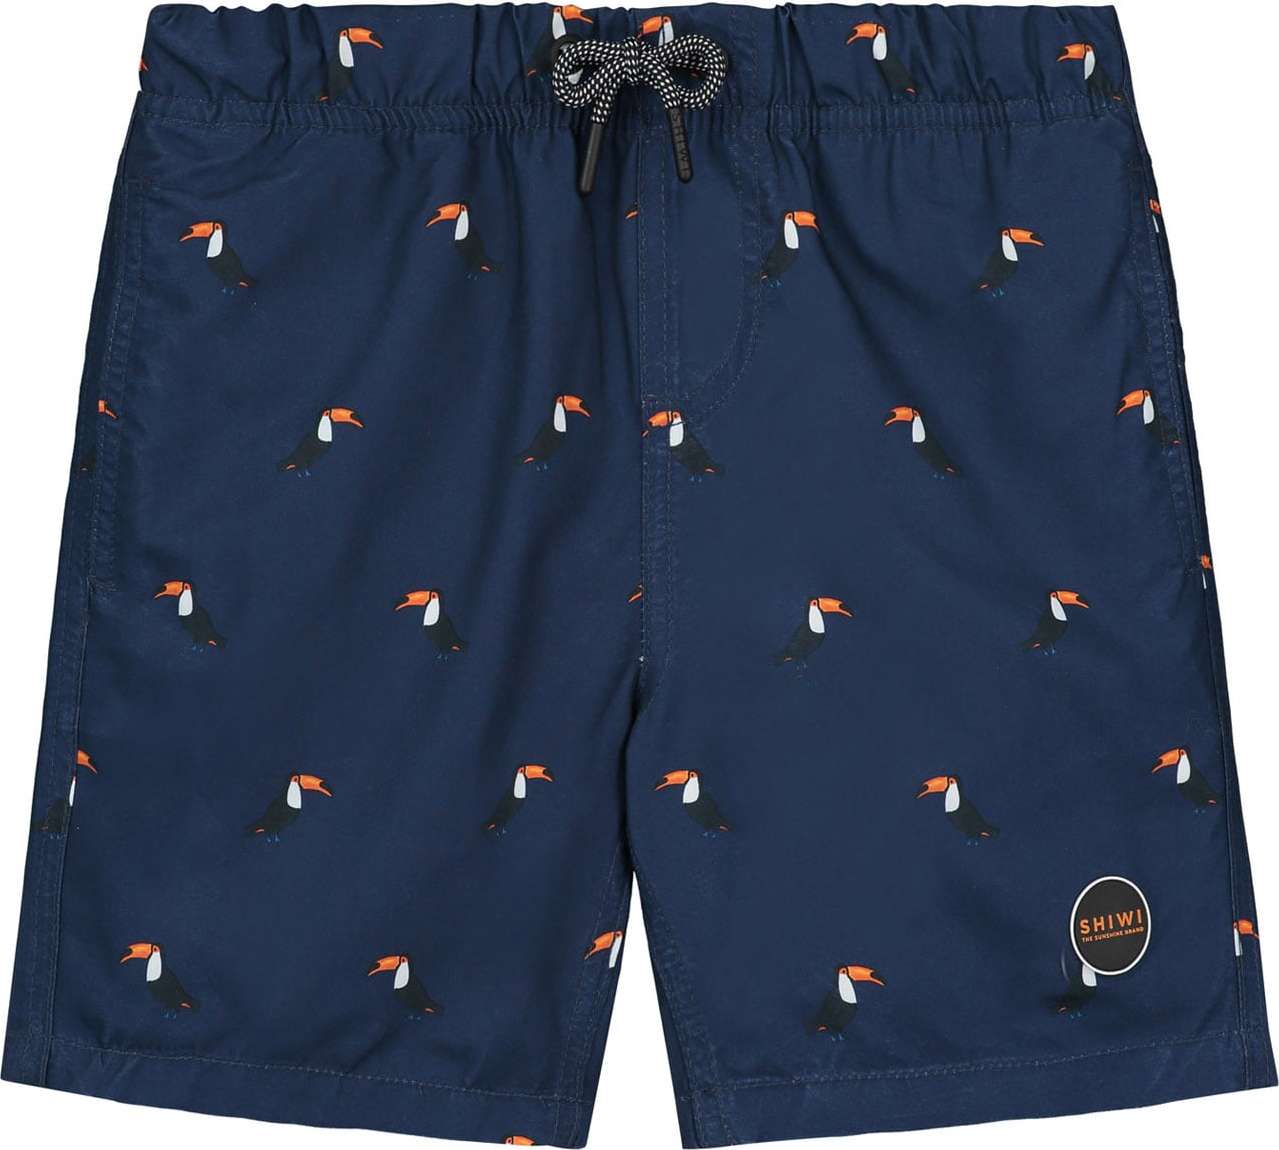 Shiwi Plavecké šortky 'Tucan' tmavě modrá / tmavě oranžová / černá / bílá